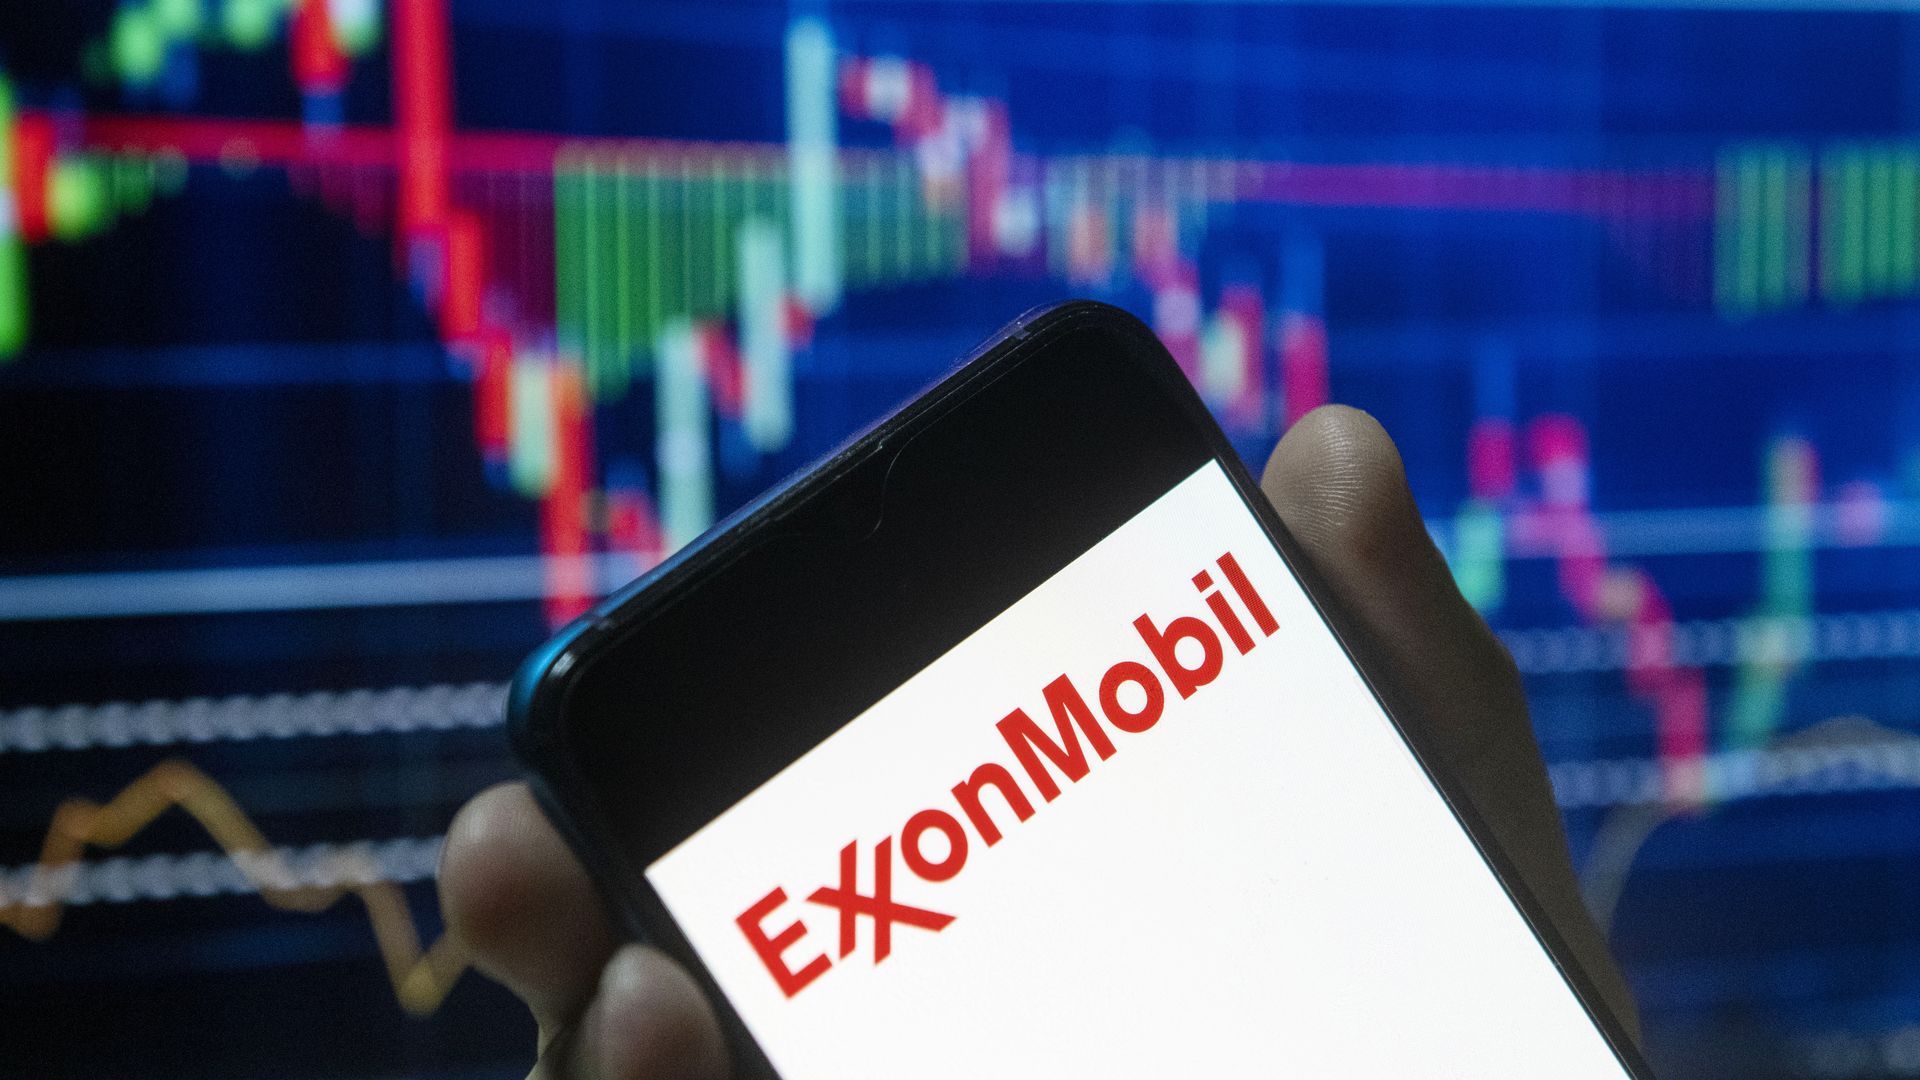 the exxon logo on a phone